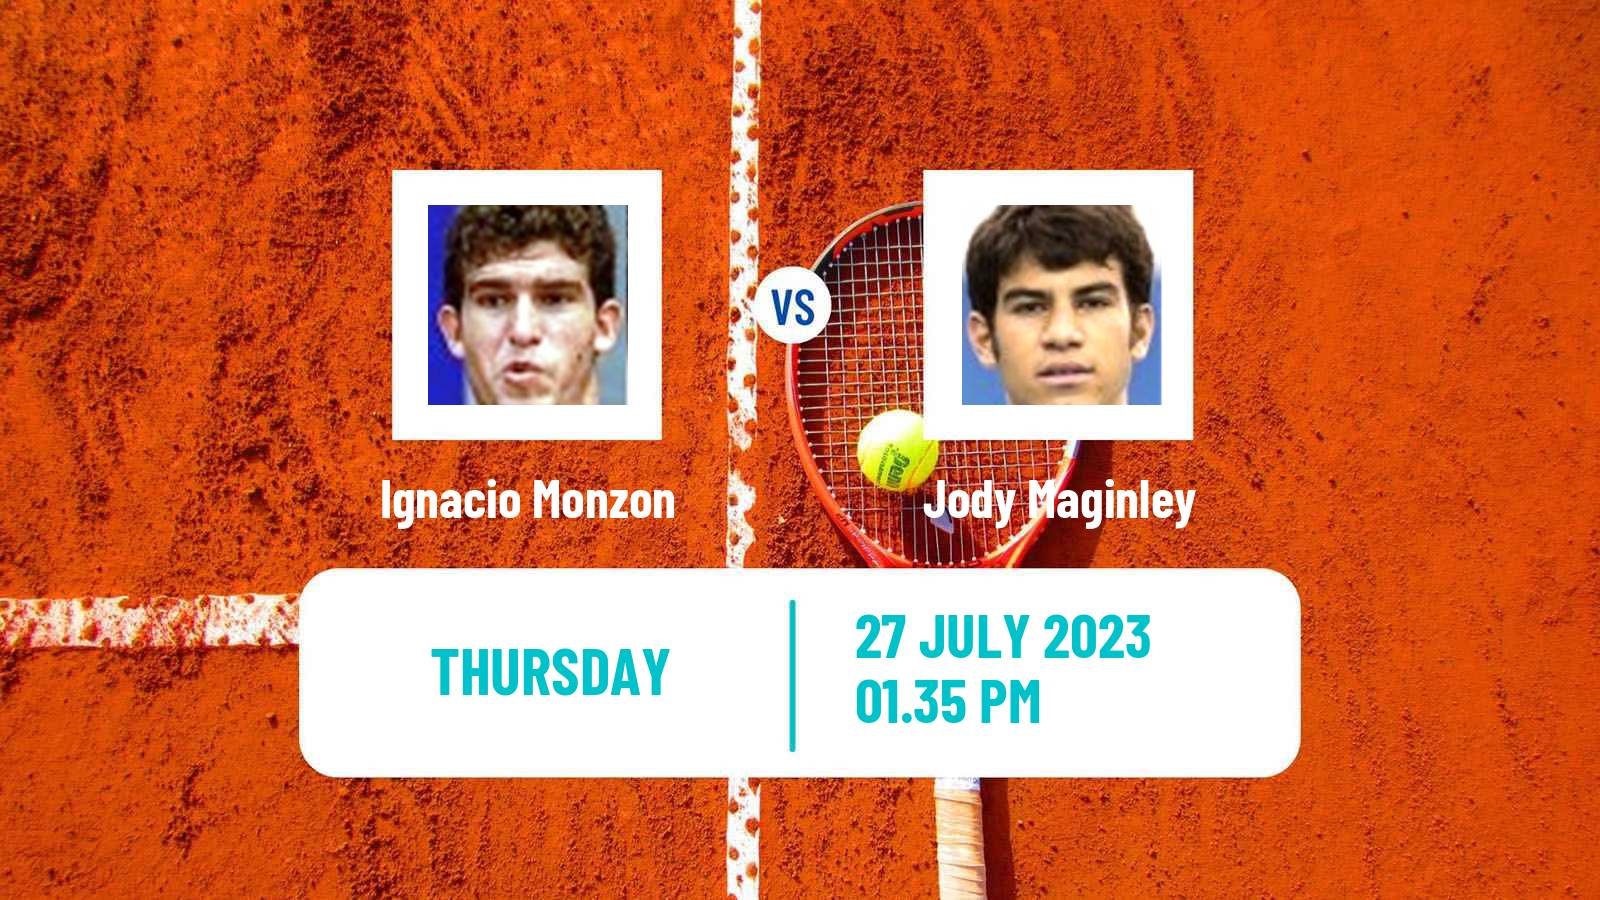 Tennis ITF M15 Pittsburgh Pa Men Ignacio Monzon - Jody Maginley